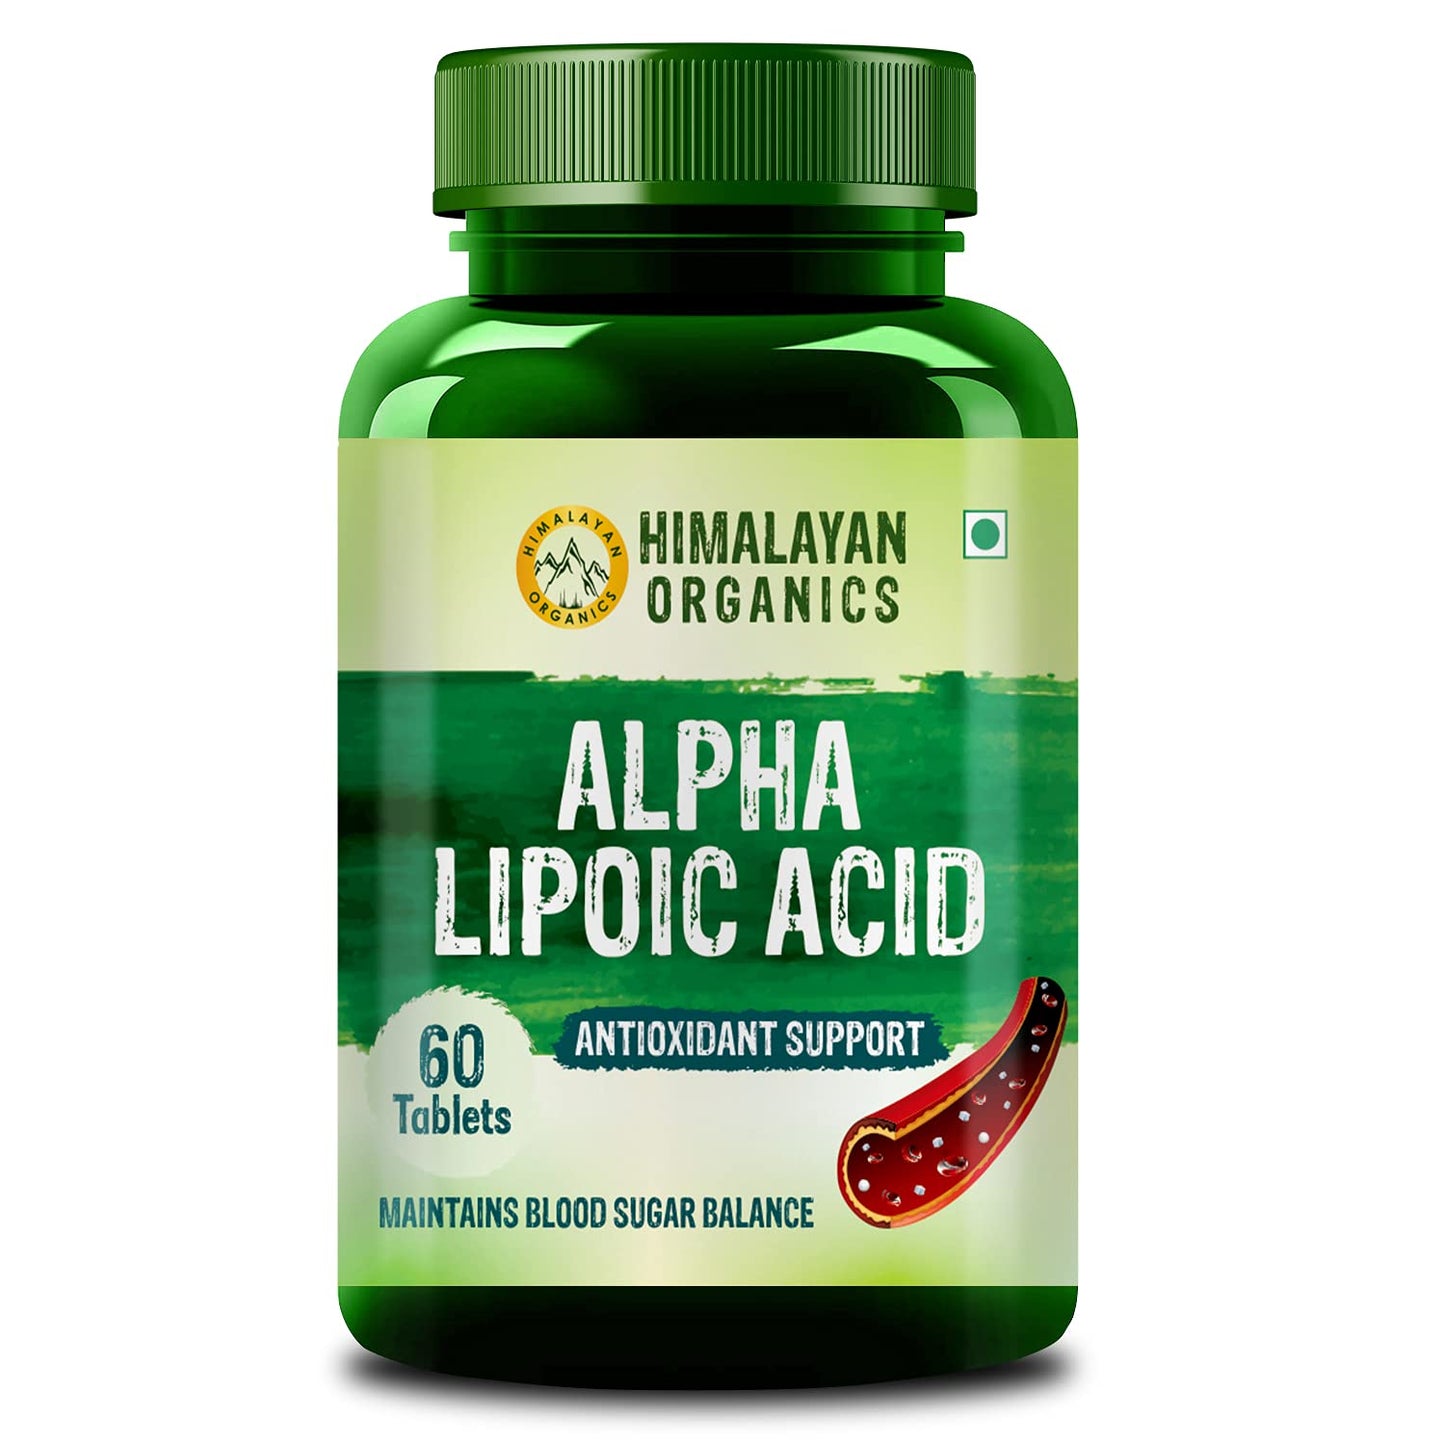 Himalayan Organics Alpha Lipoic Acid 300mg 